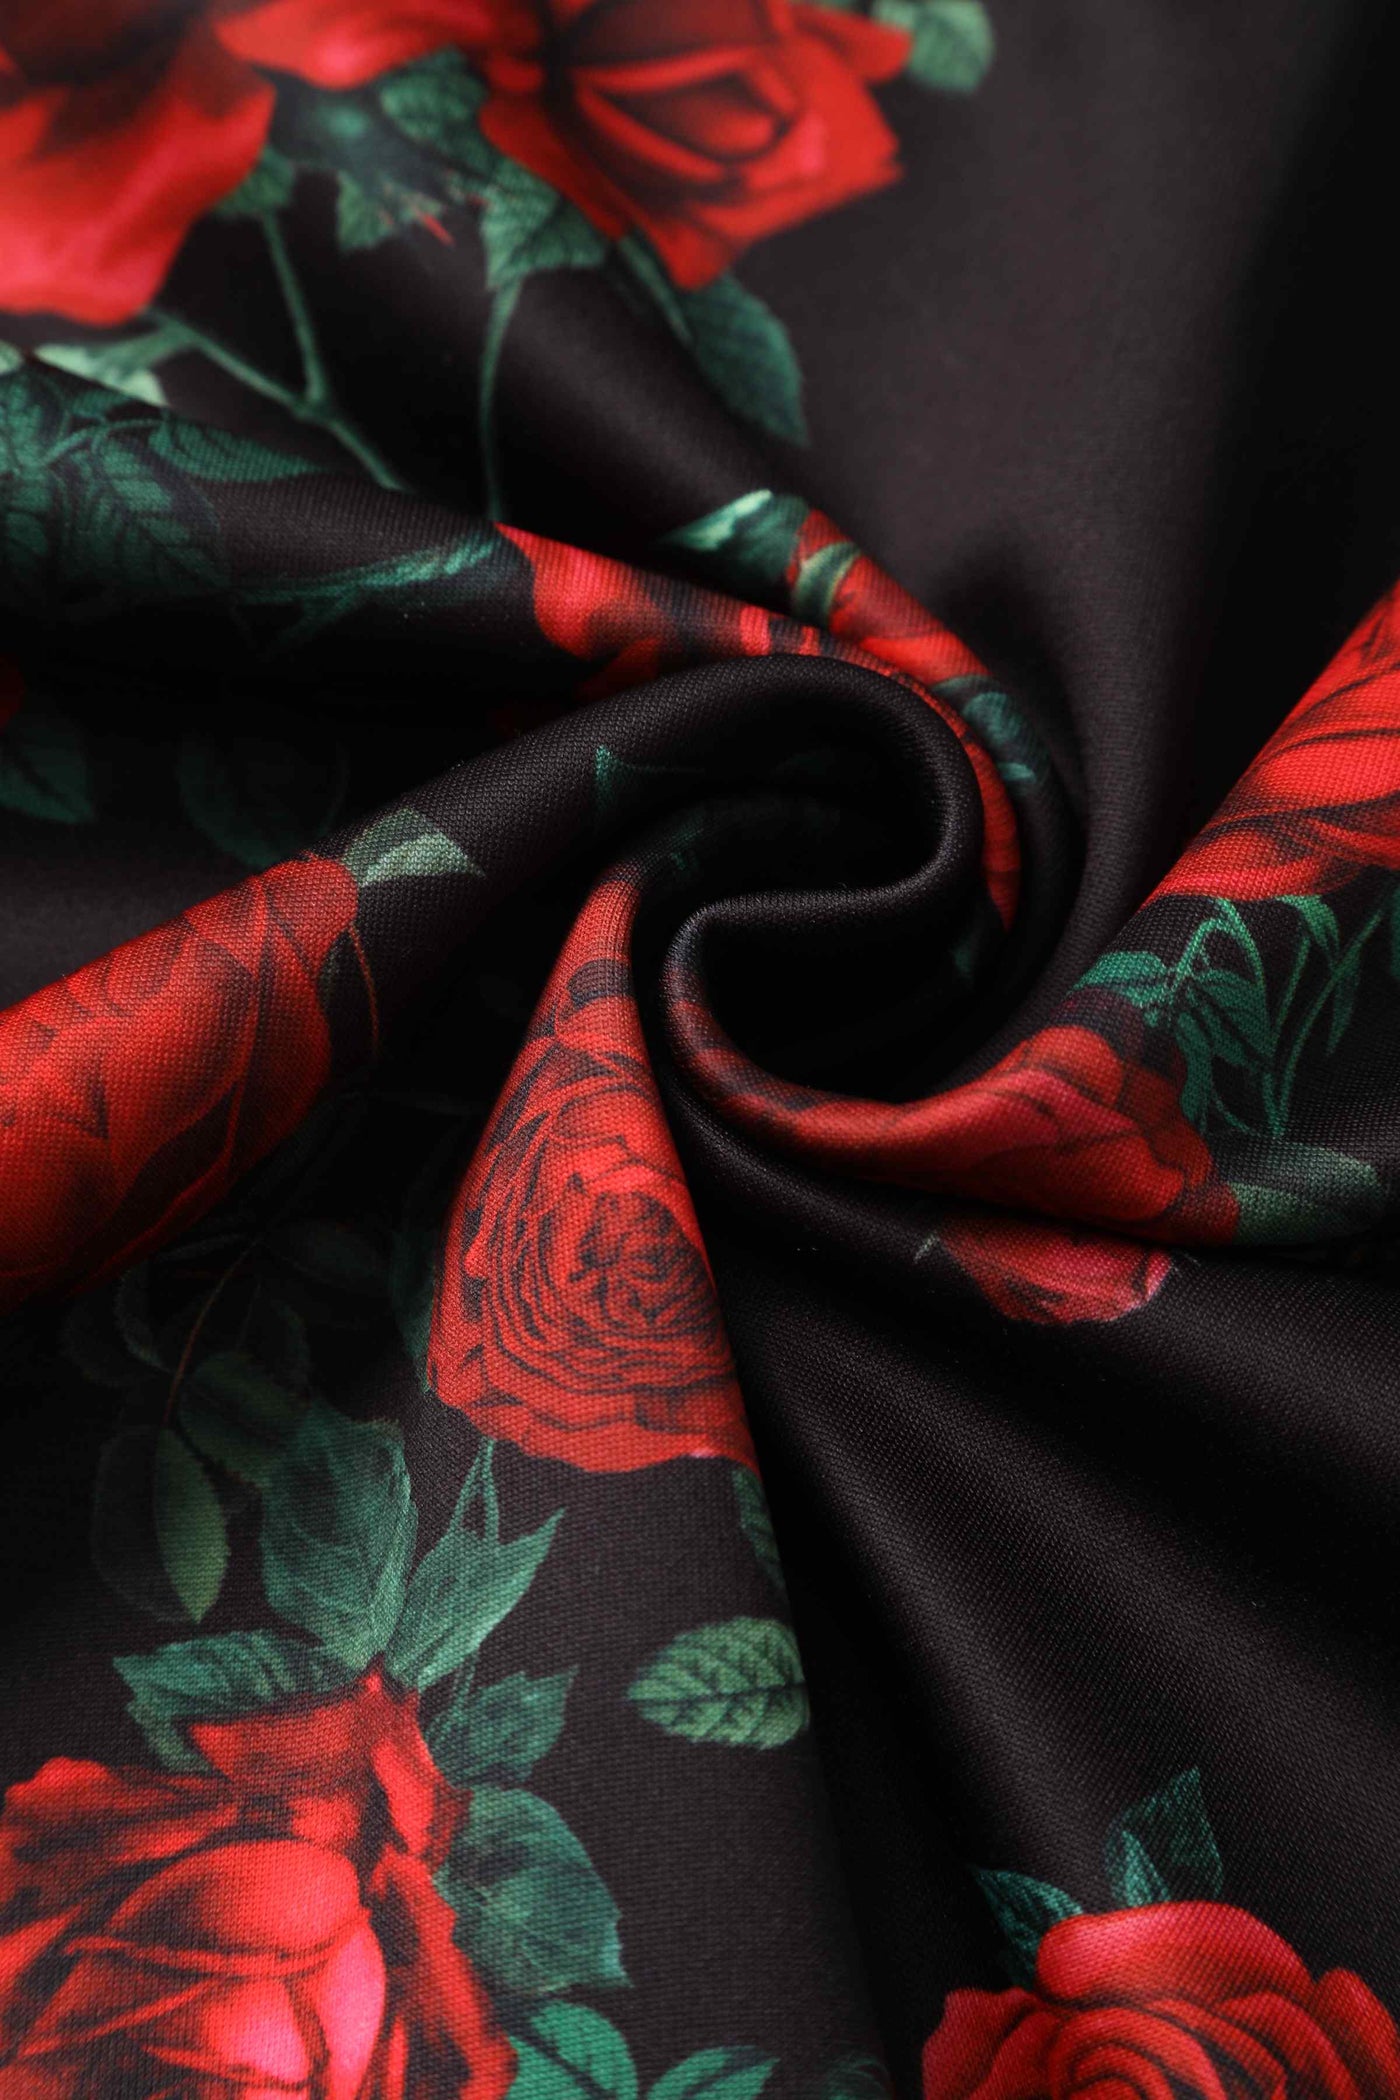 Red Rose Formal Swing Dress in Black Fabric